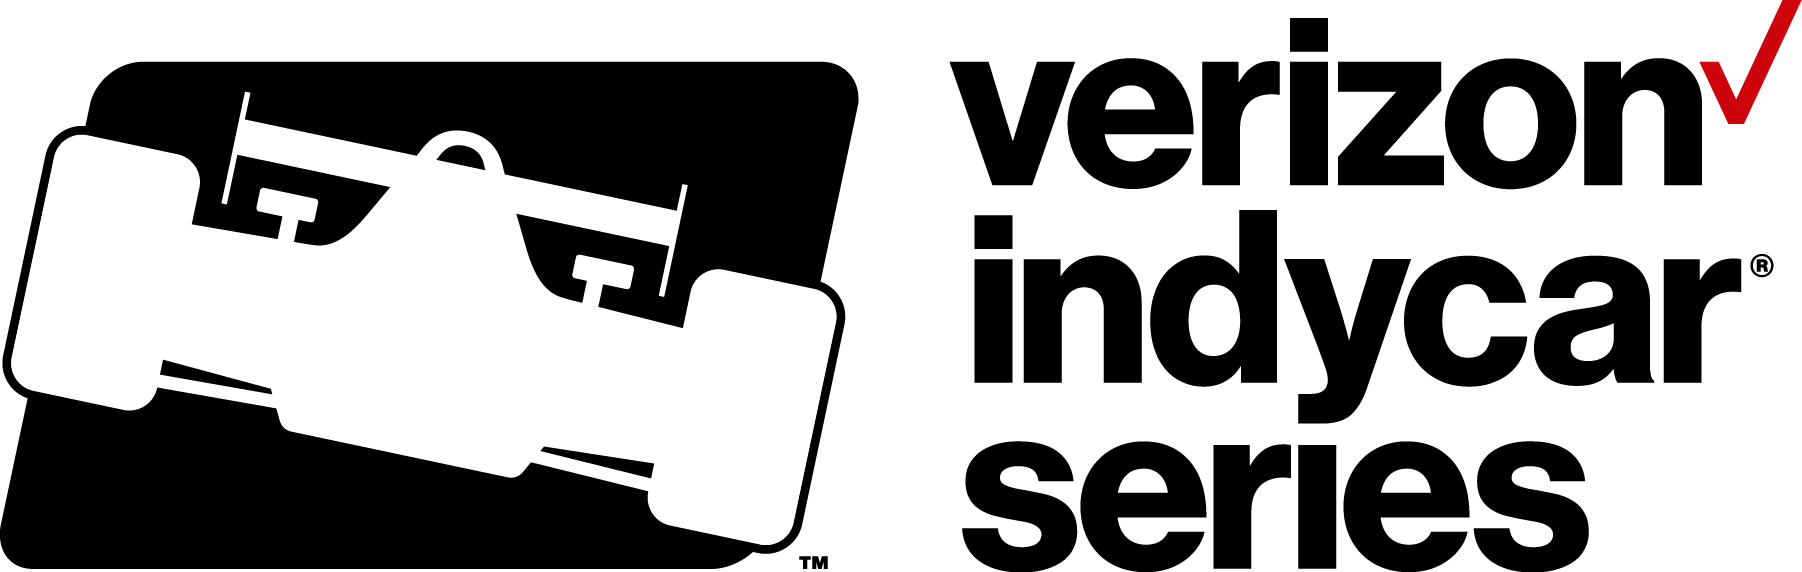 Verizv Car Logo - New Verizon IndyCar Series Logo - Racing News